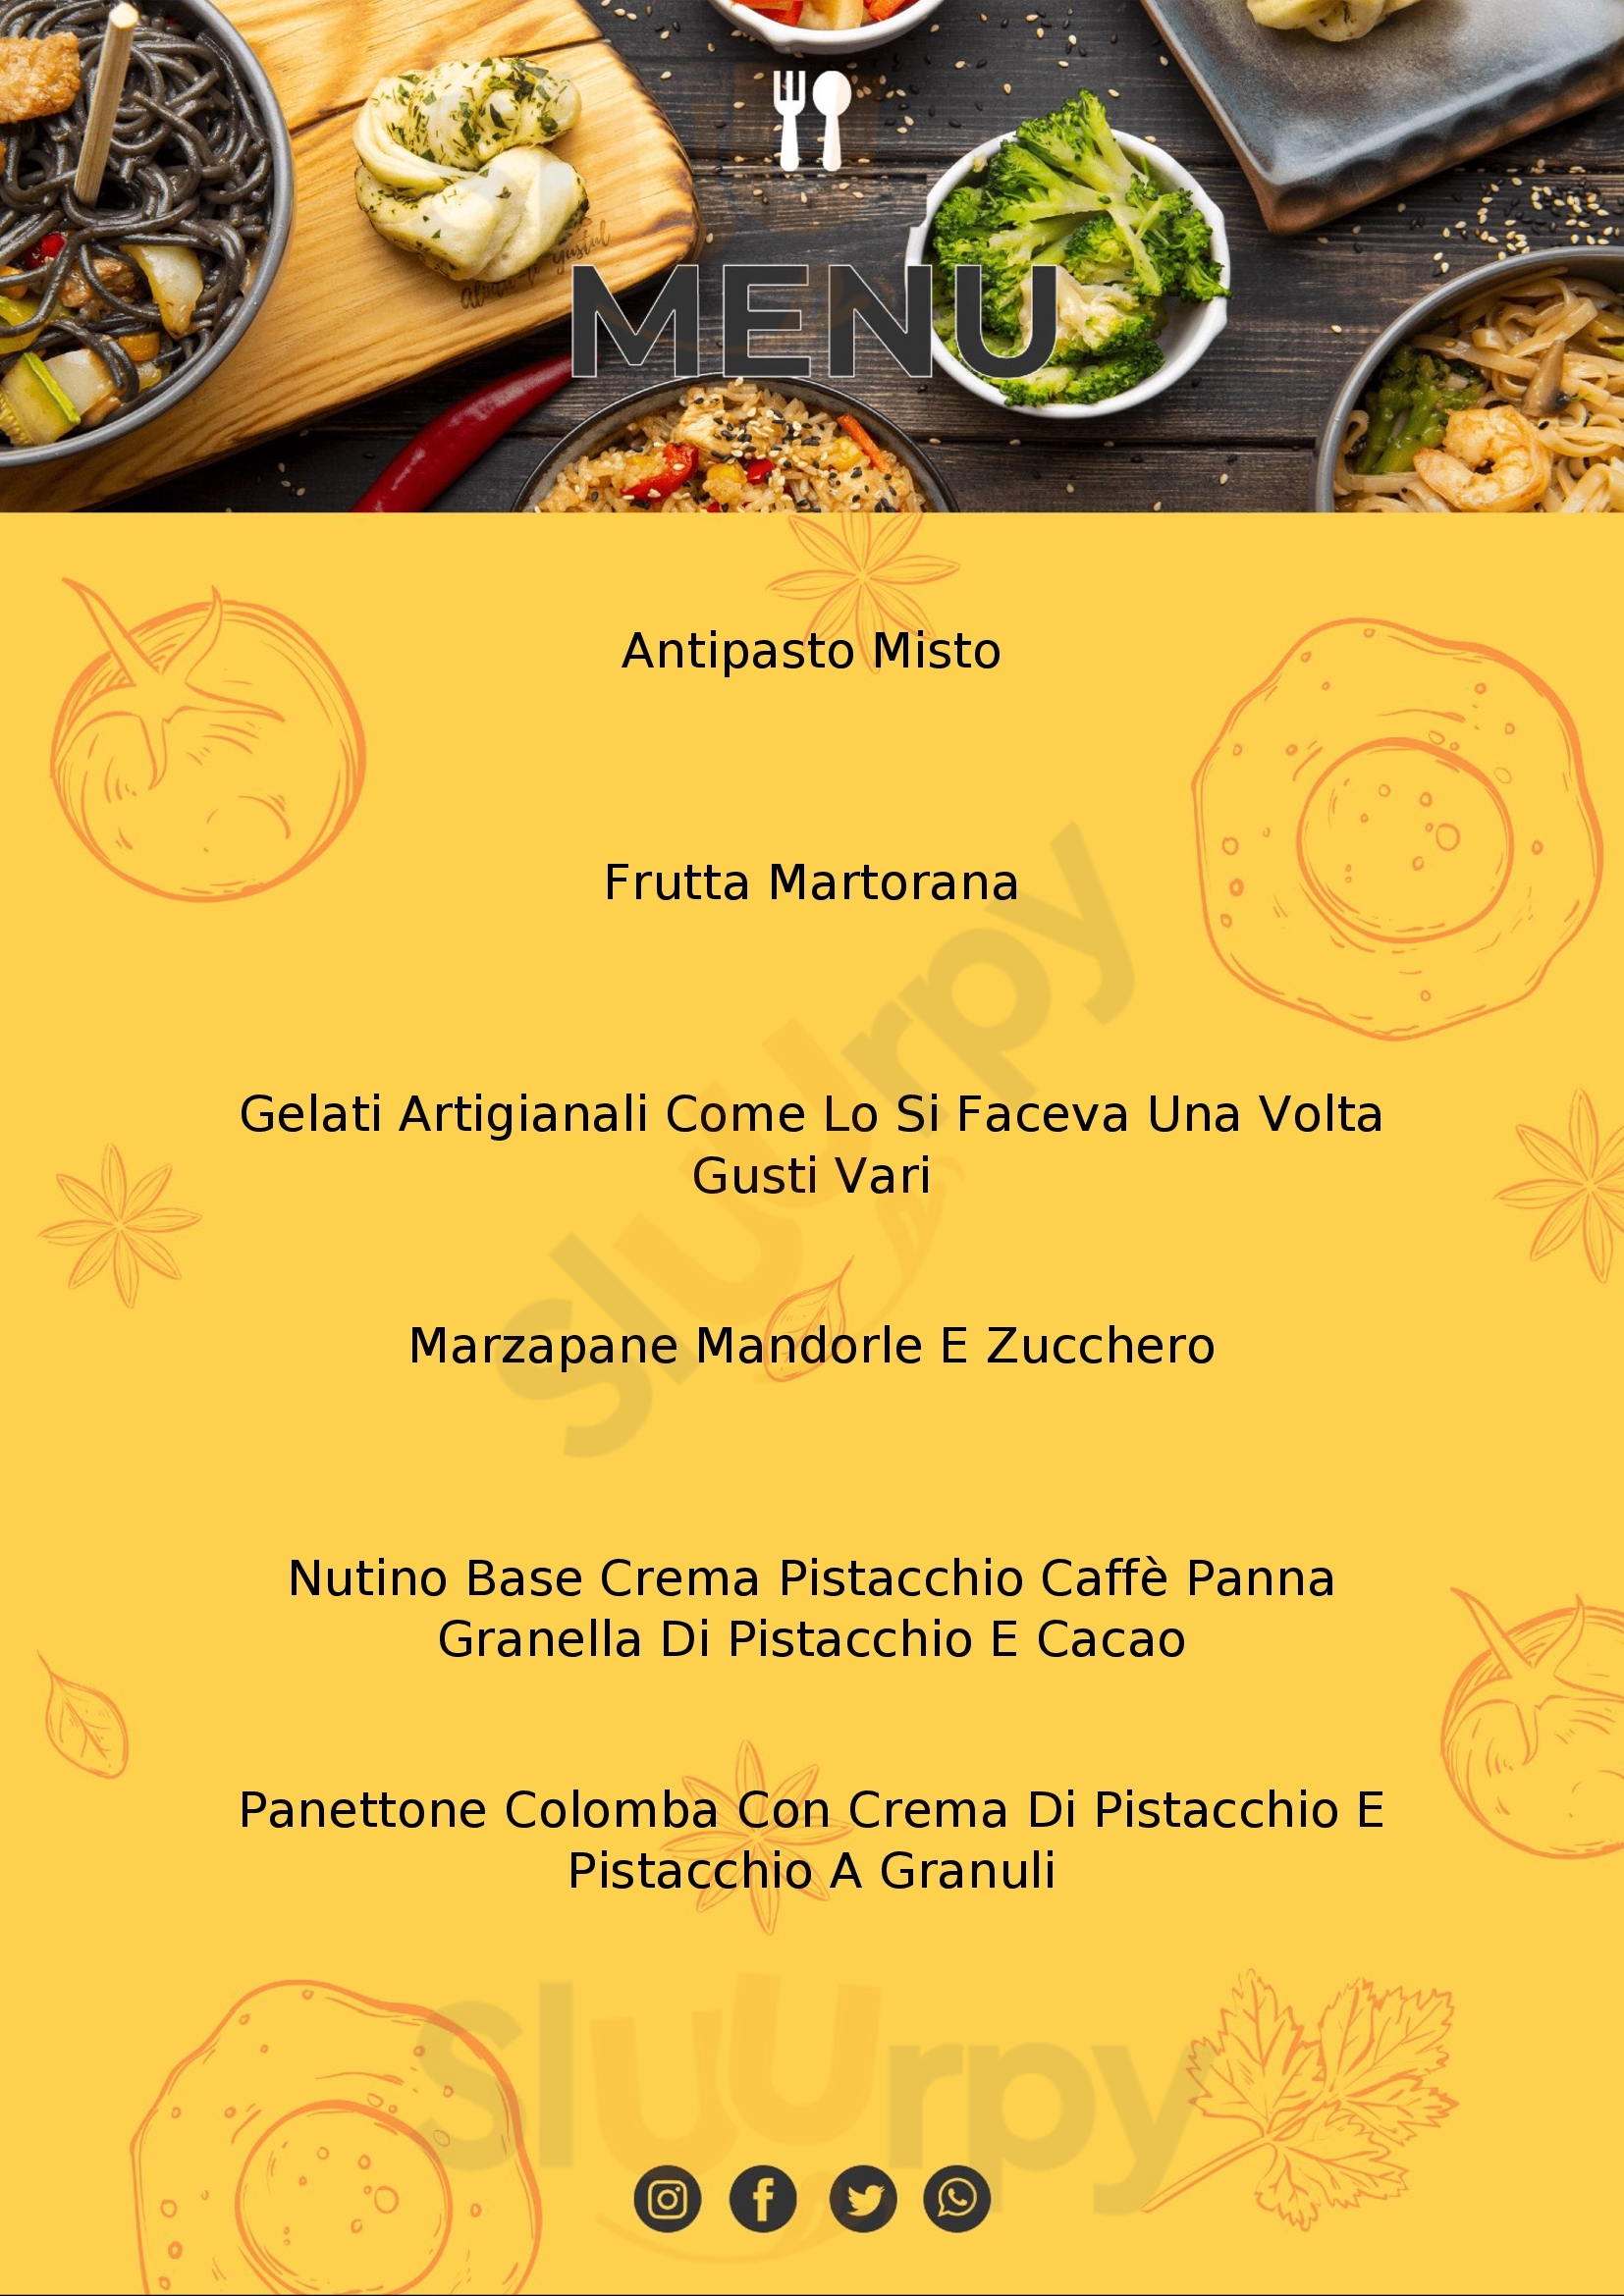 Spaghetteria Eclisse Cafe Realmonte menù 1 pagina